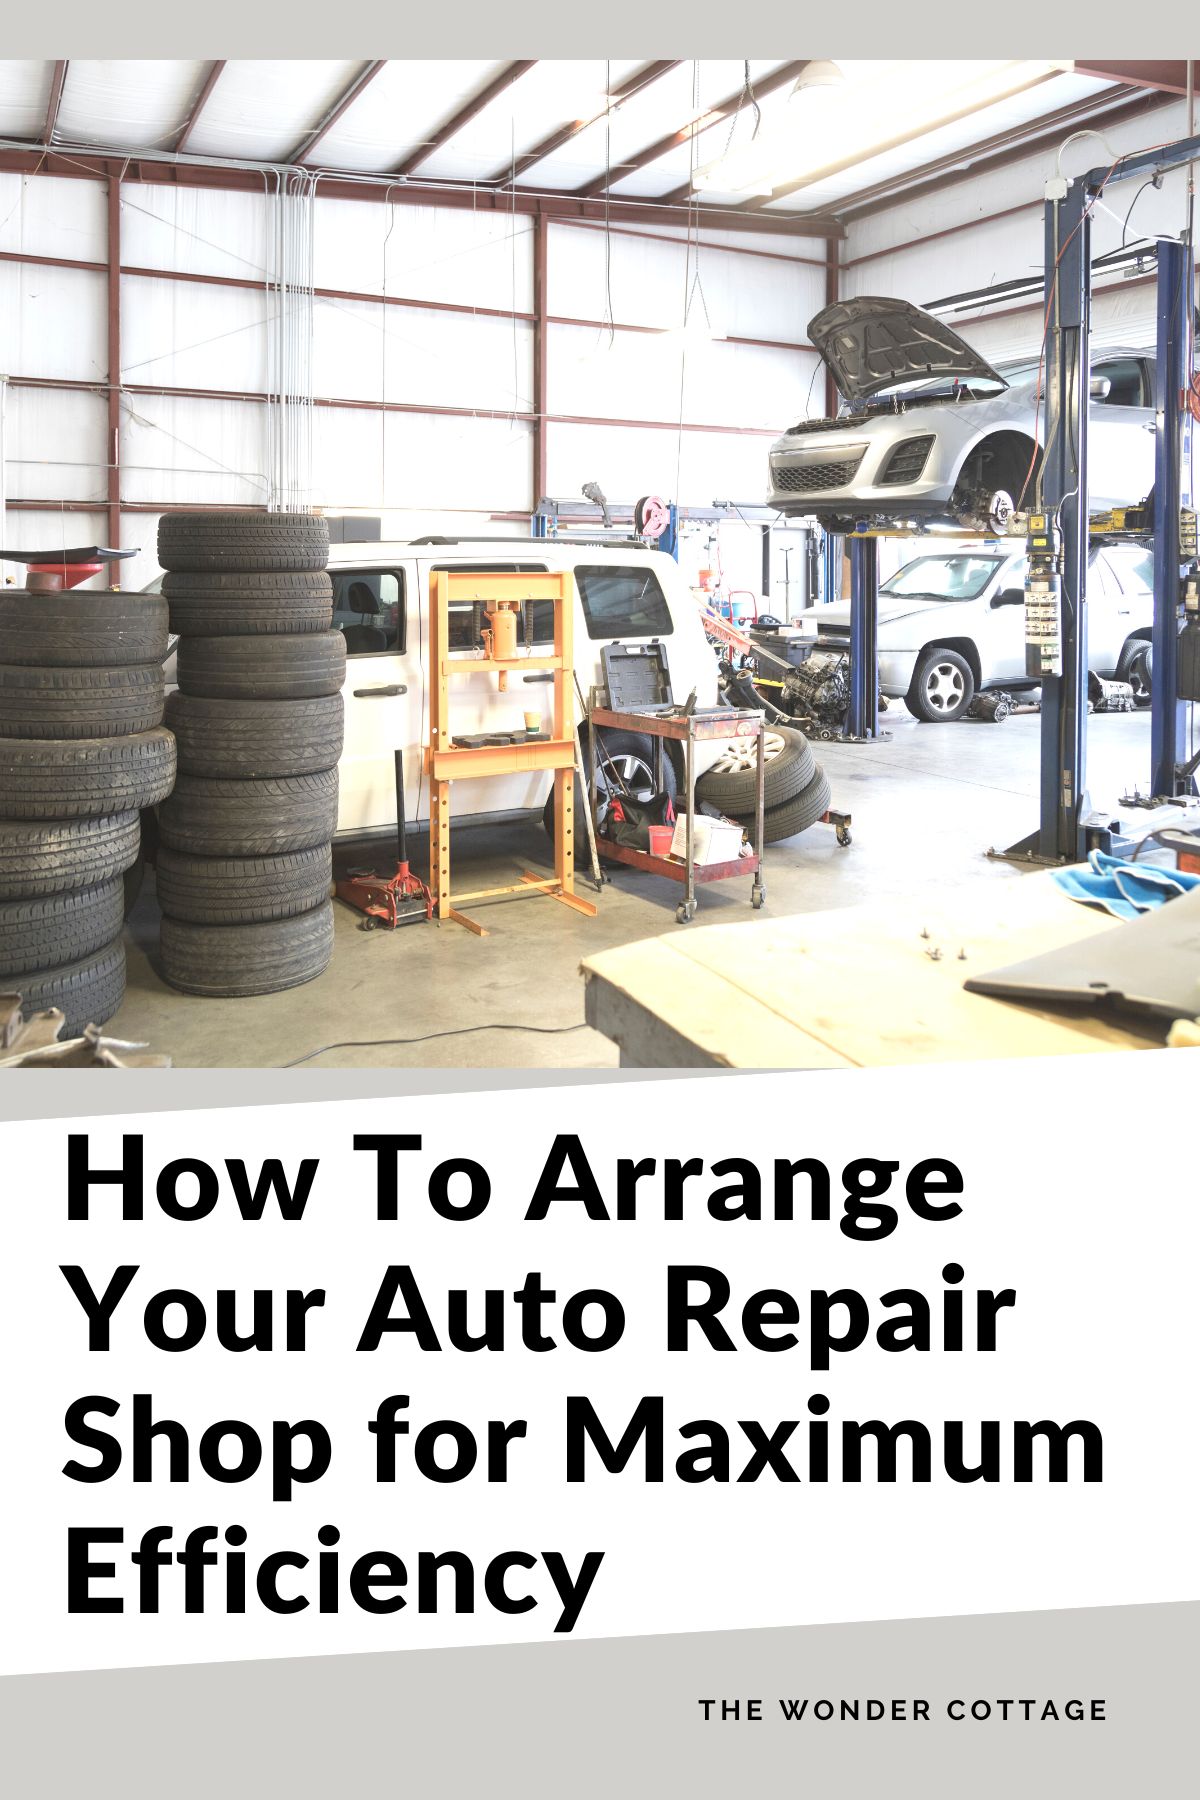 How To Arrange Your Auto Repair Shop for Maximum Efficiency